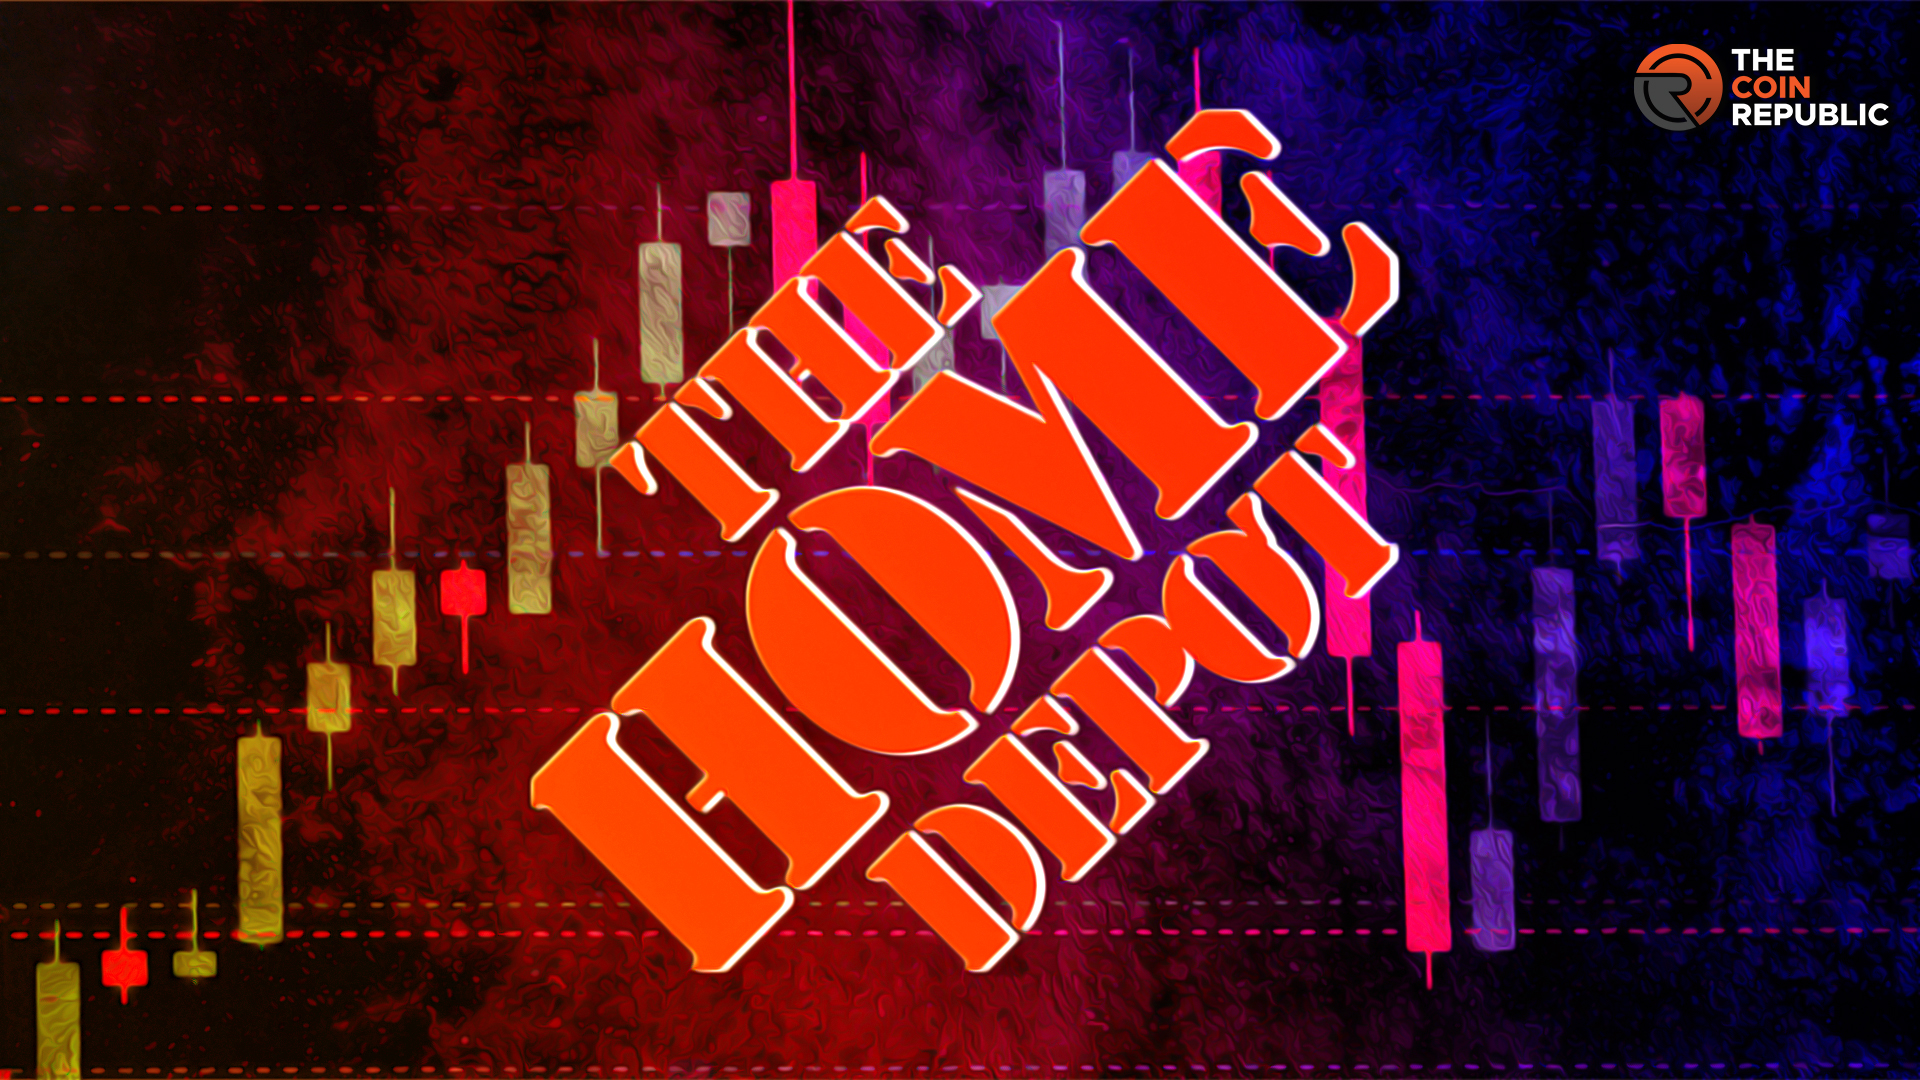 HD Stock Price Below $300; Home Depot Stock Turned Bearish?